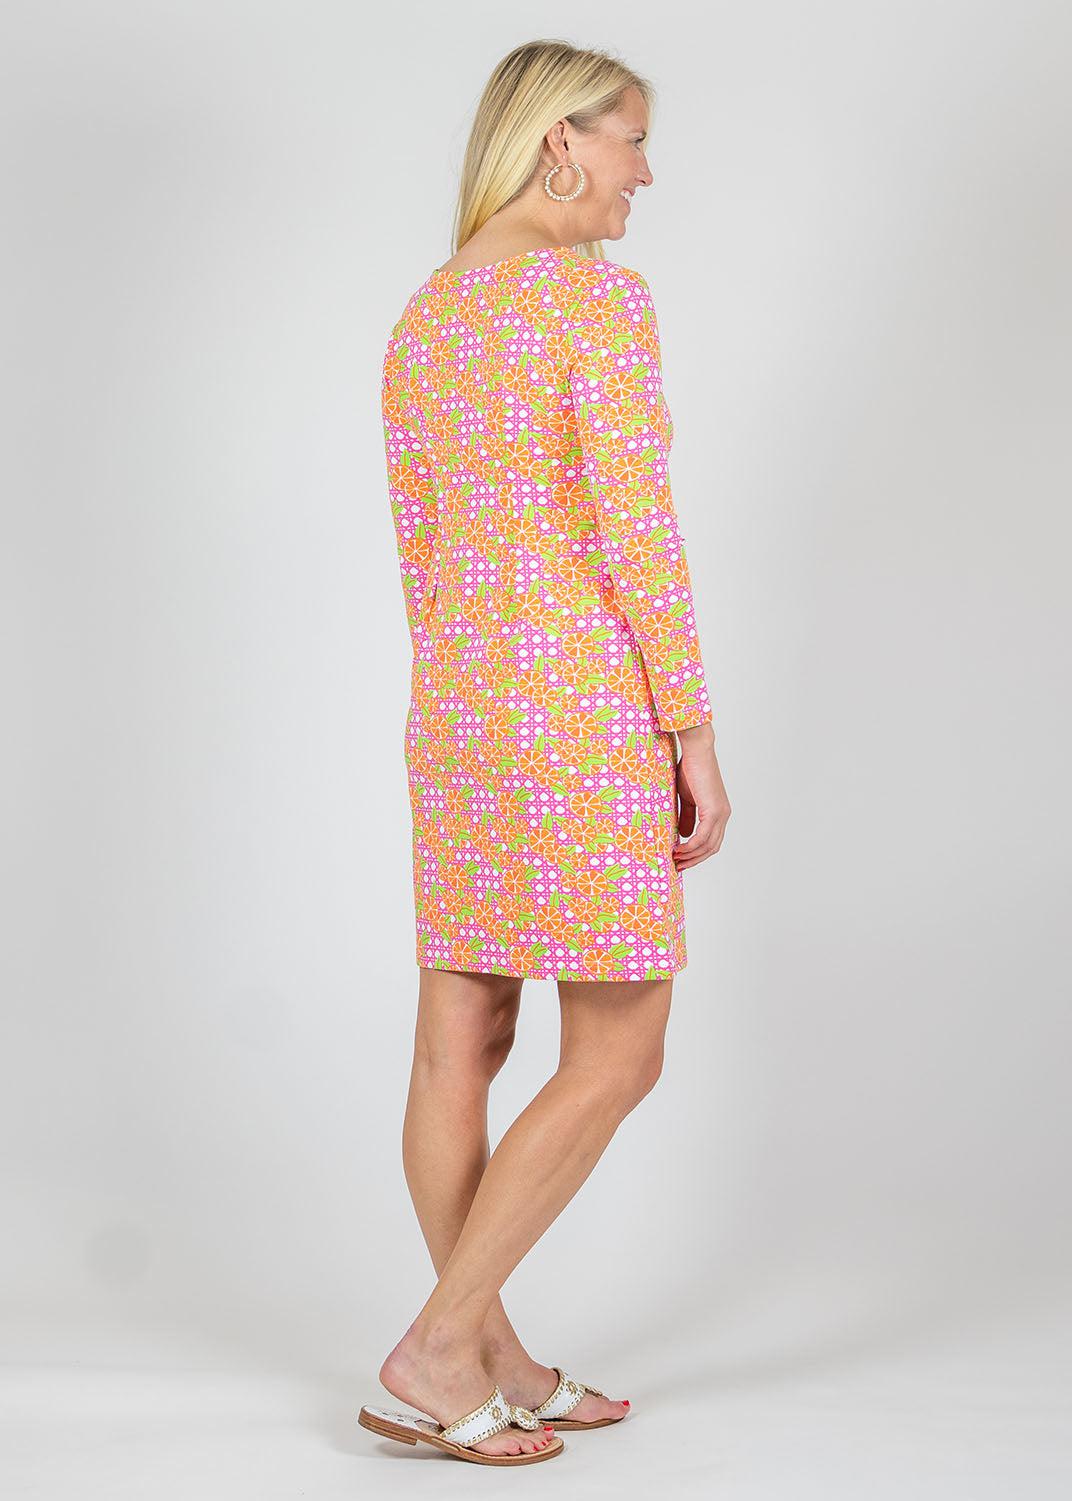 Marina Full Sleeve Dress - Italian Citrus Pink/Orange